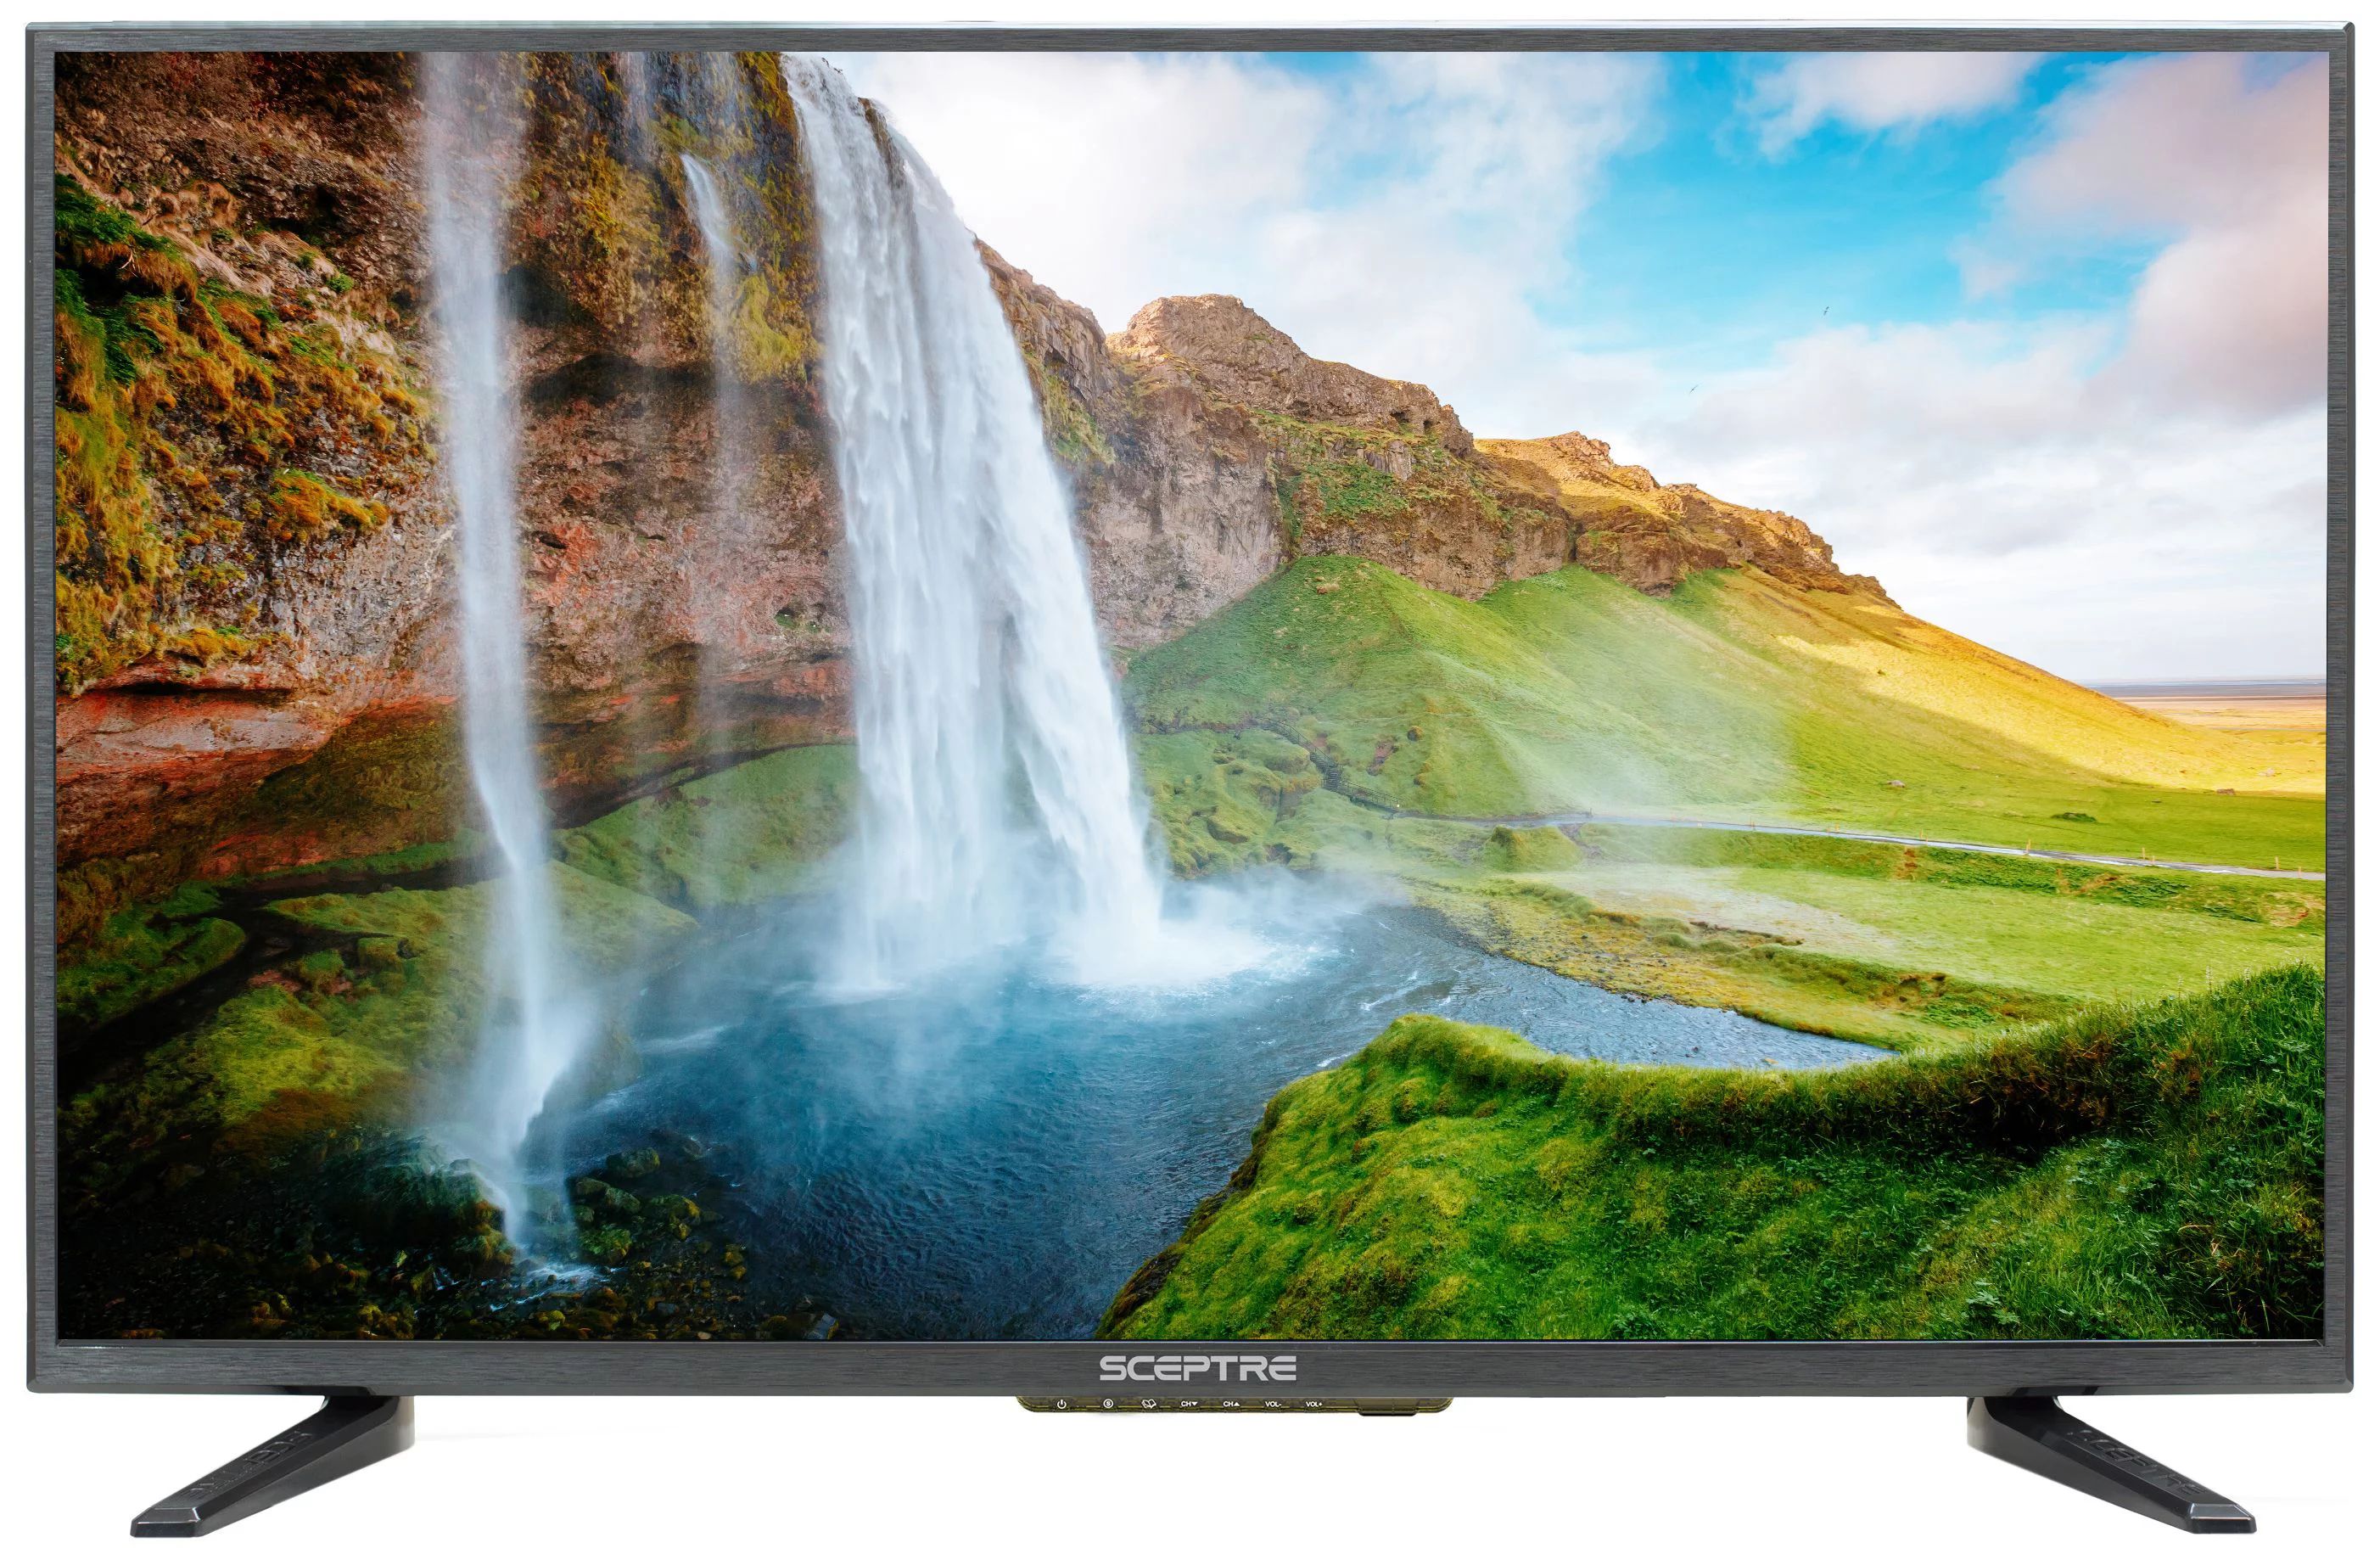 Sceptre 32" Class 720P HD LED TV X322BV-SR | Walmart (US)